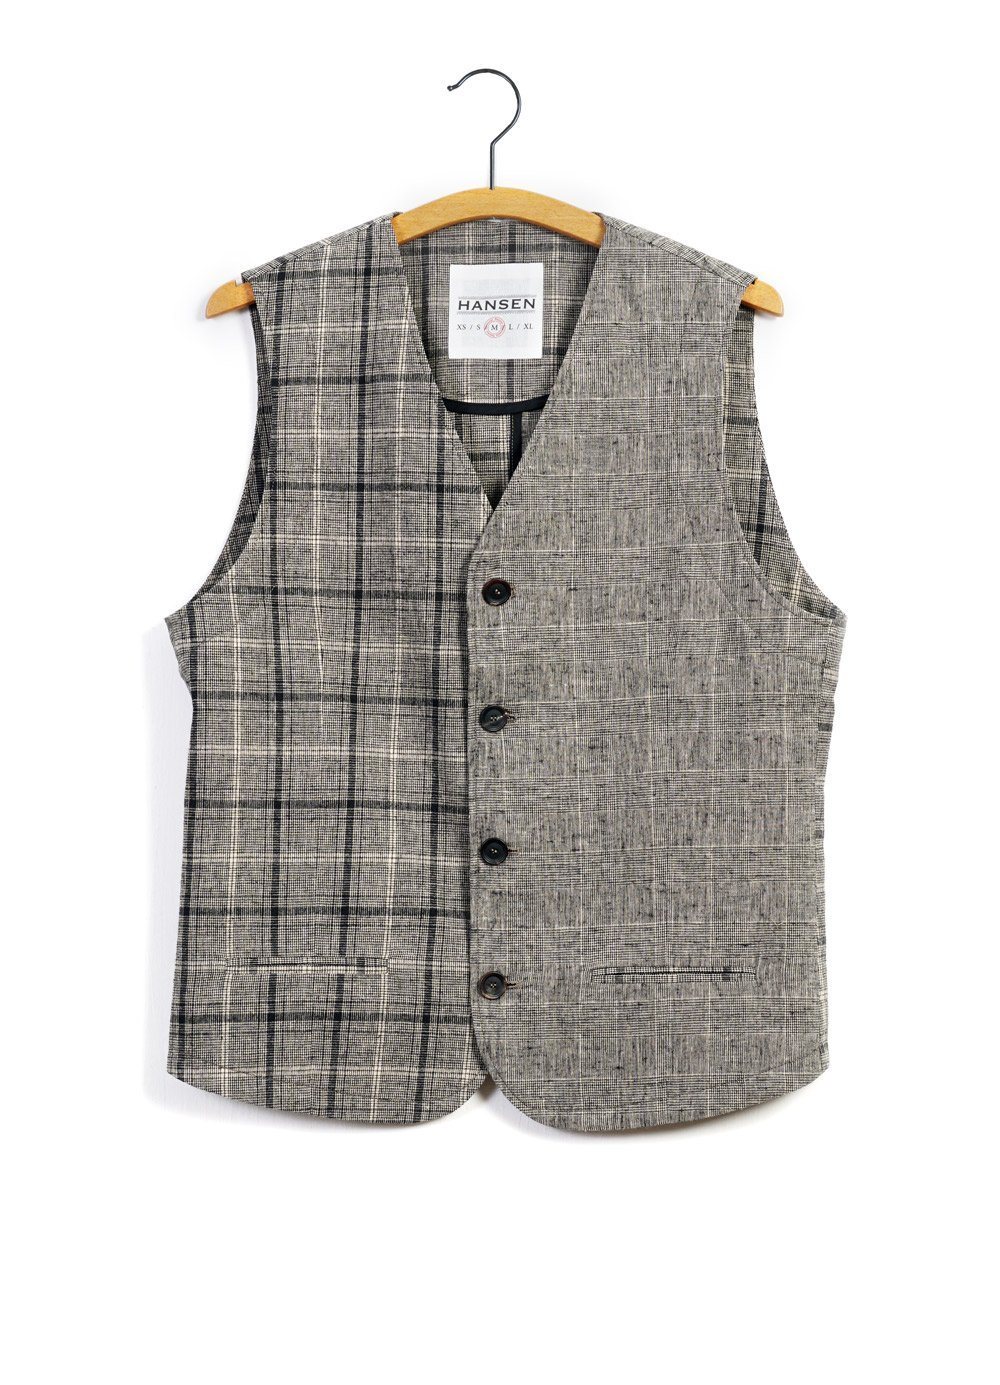 DANIEL | Four Button Waistcoat | Mixed Check | HANSEN Garments